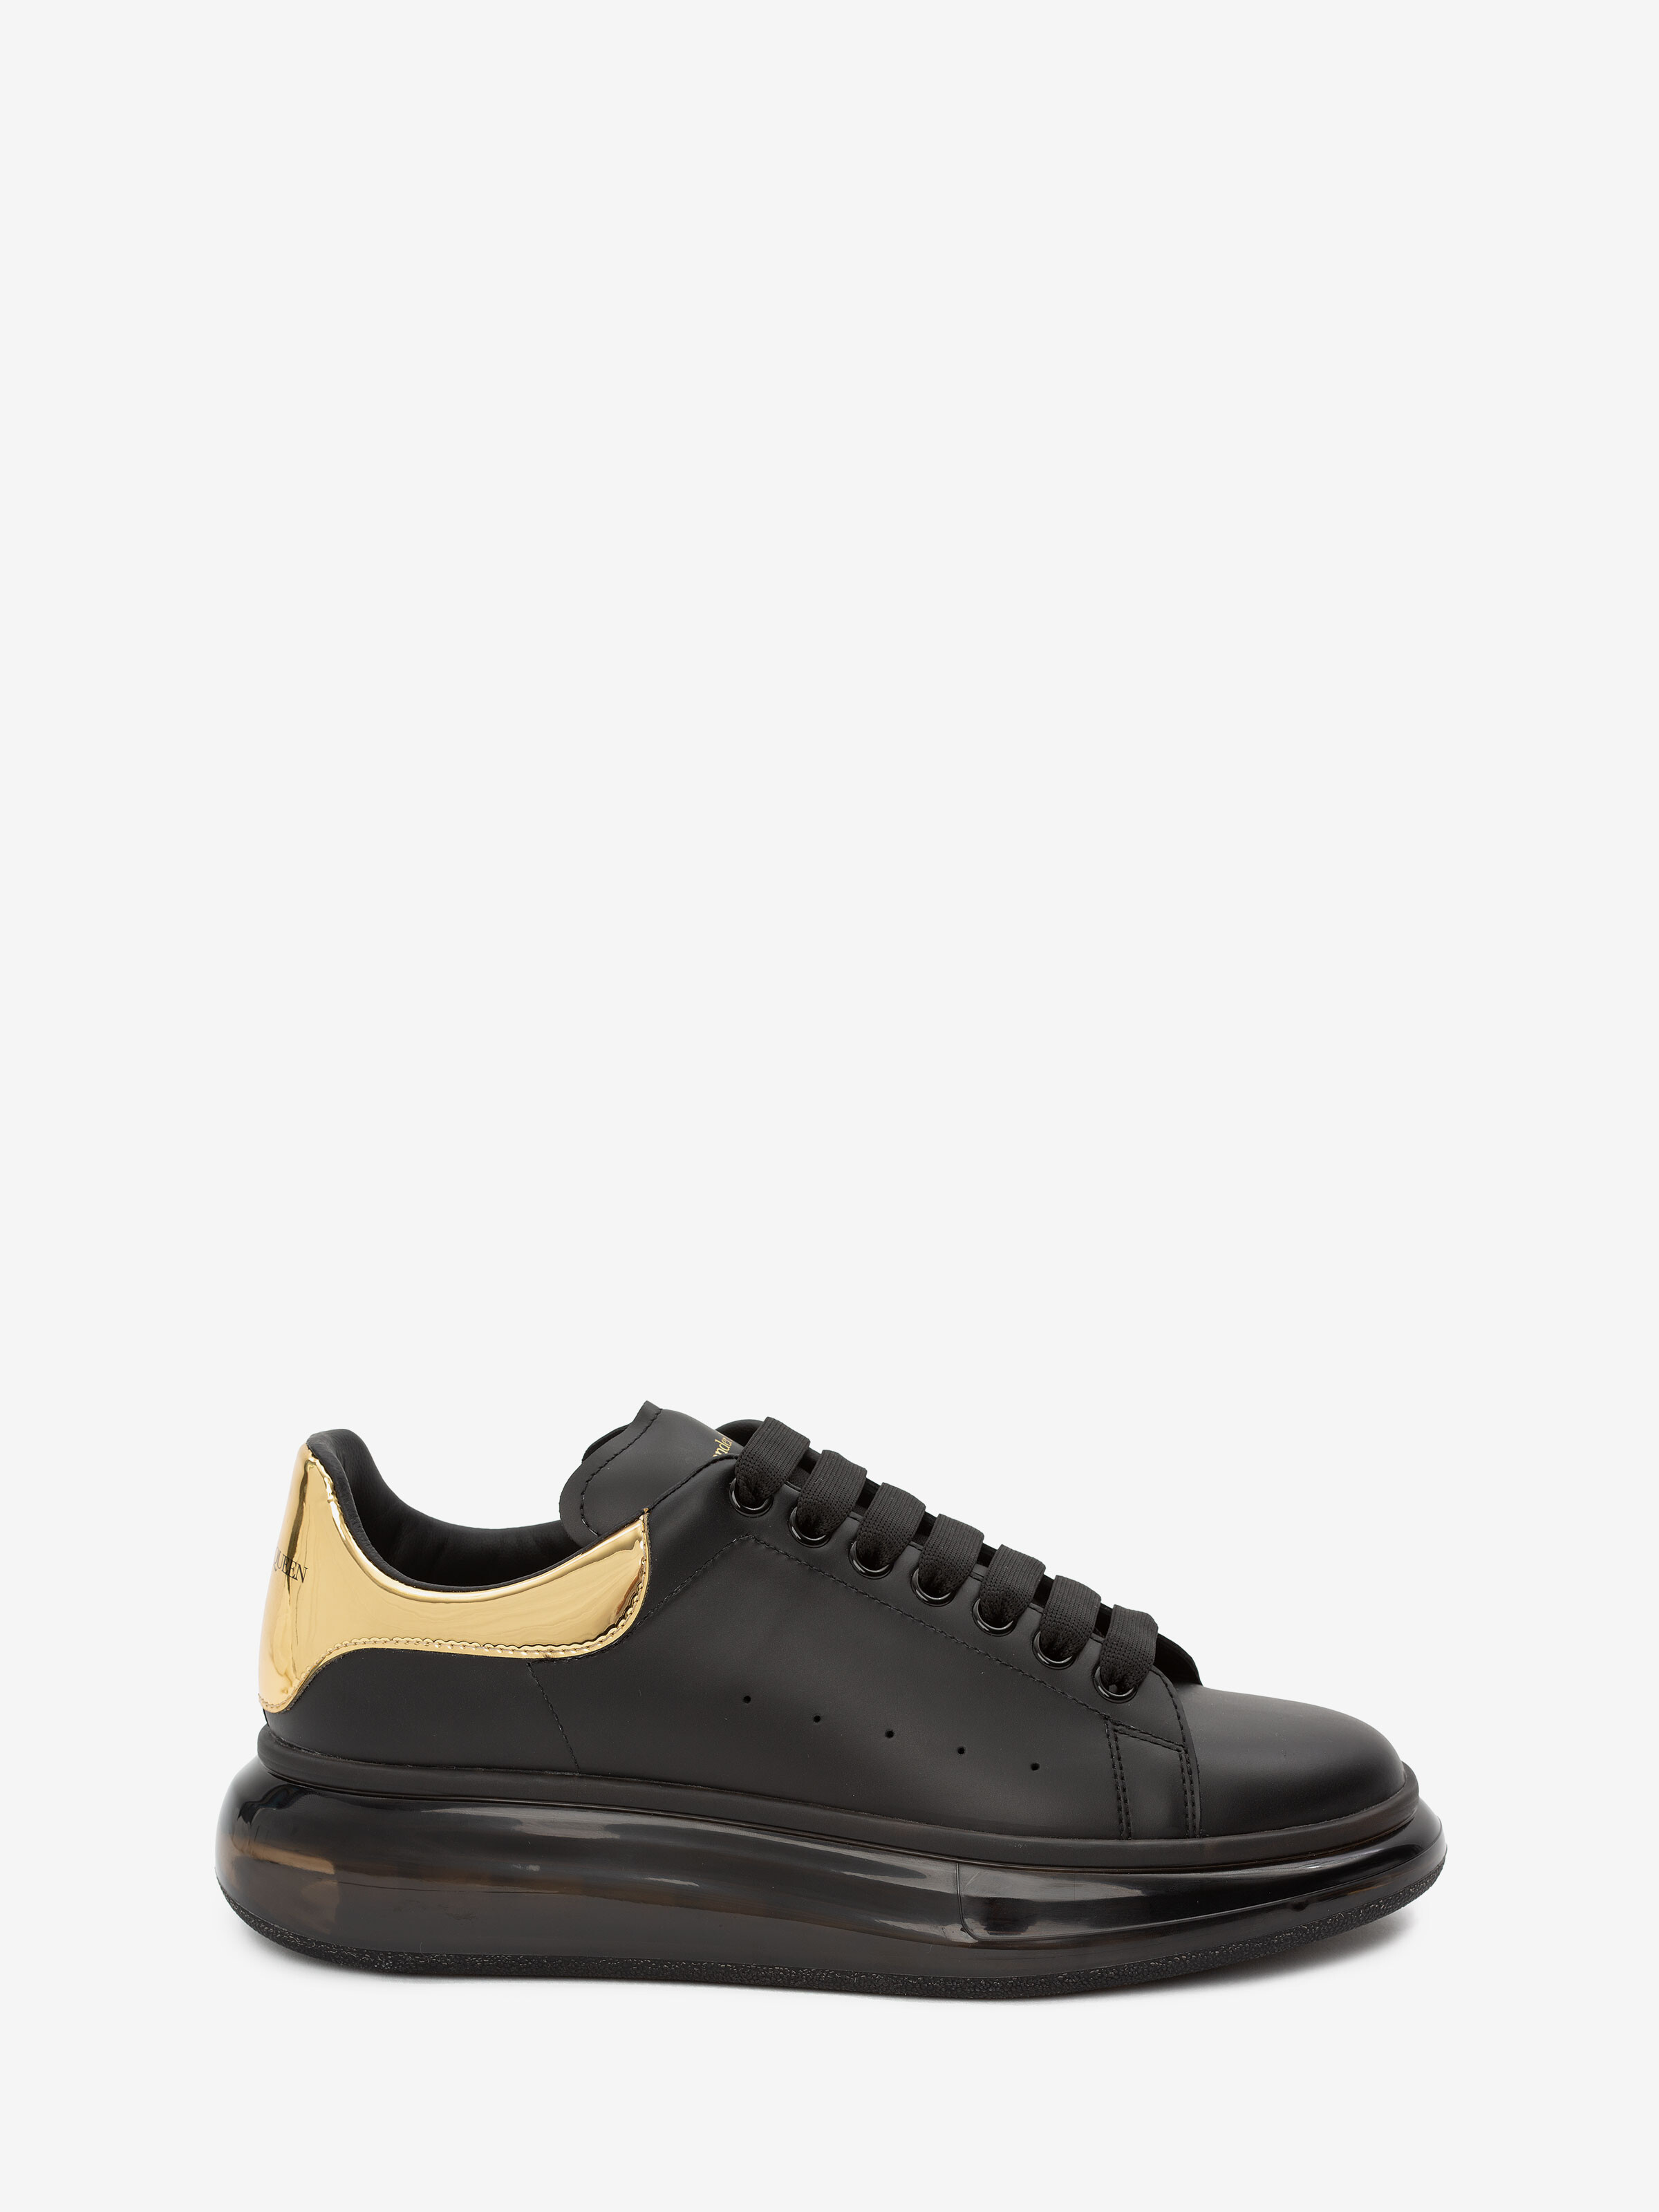 alexander mcqueen sneakers black and gold